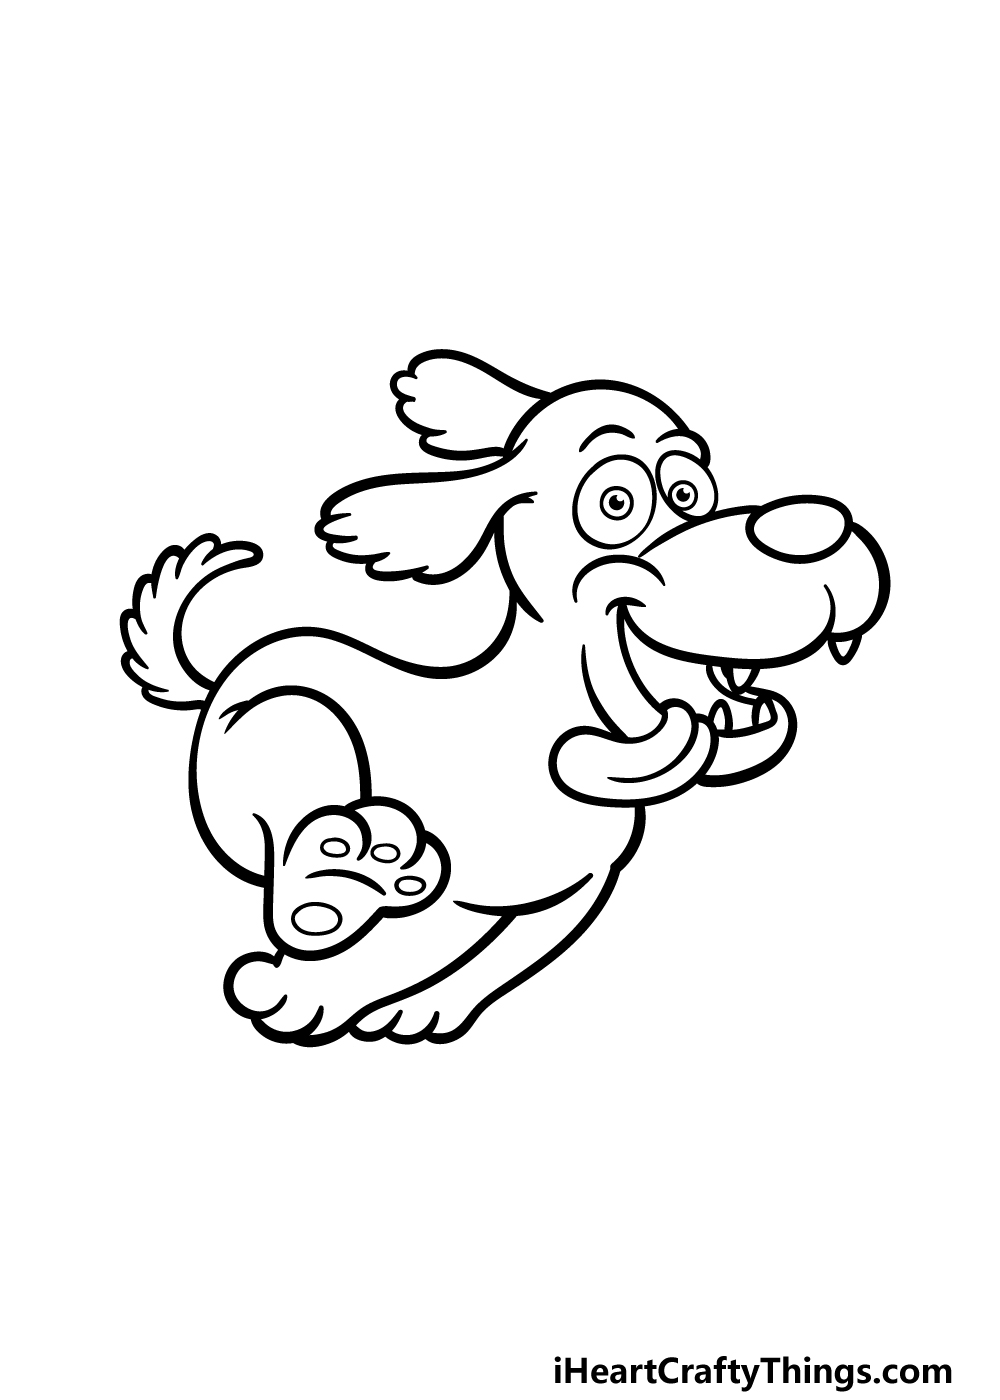 how to draw a cartoon dog step 3